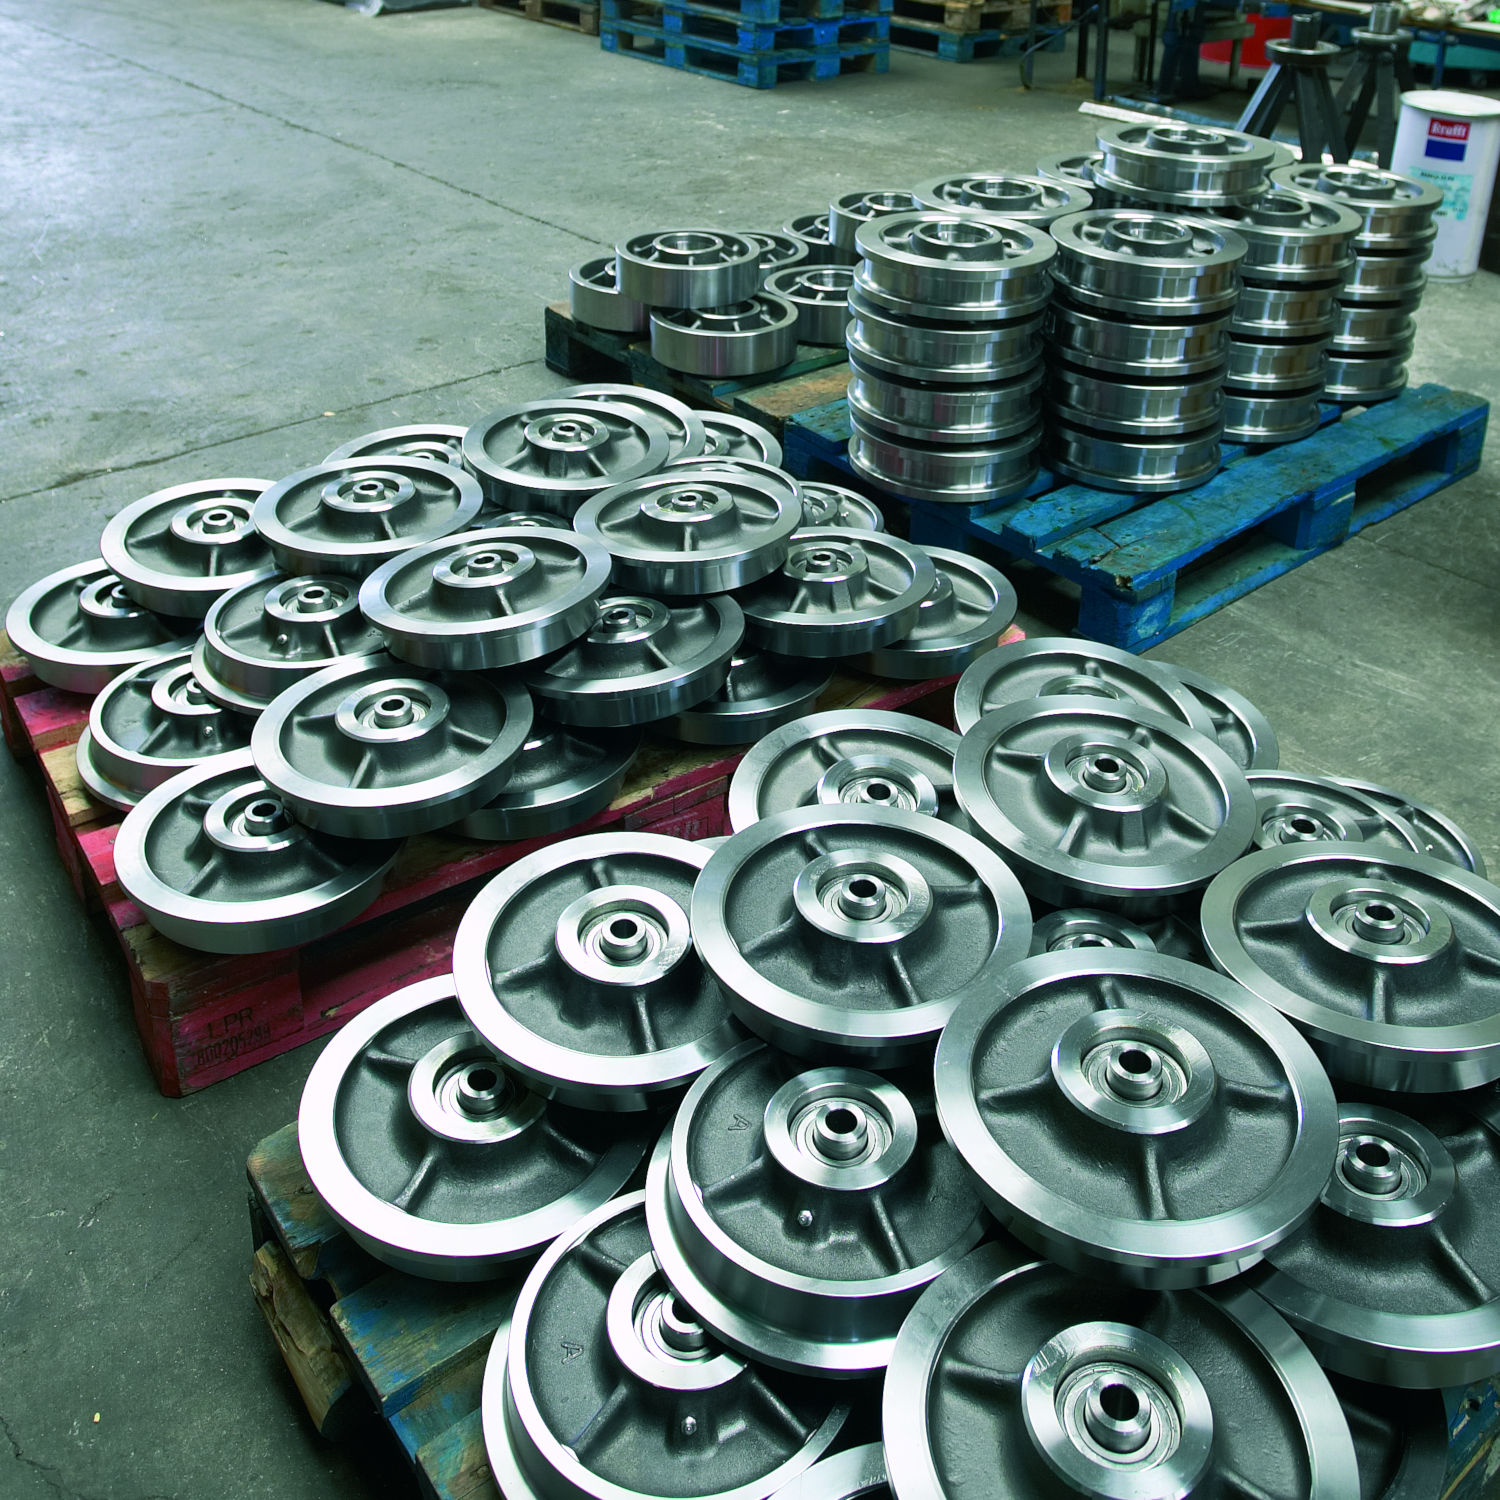 Metallic wheels